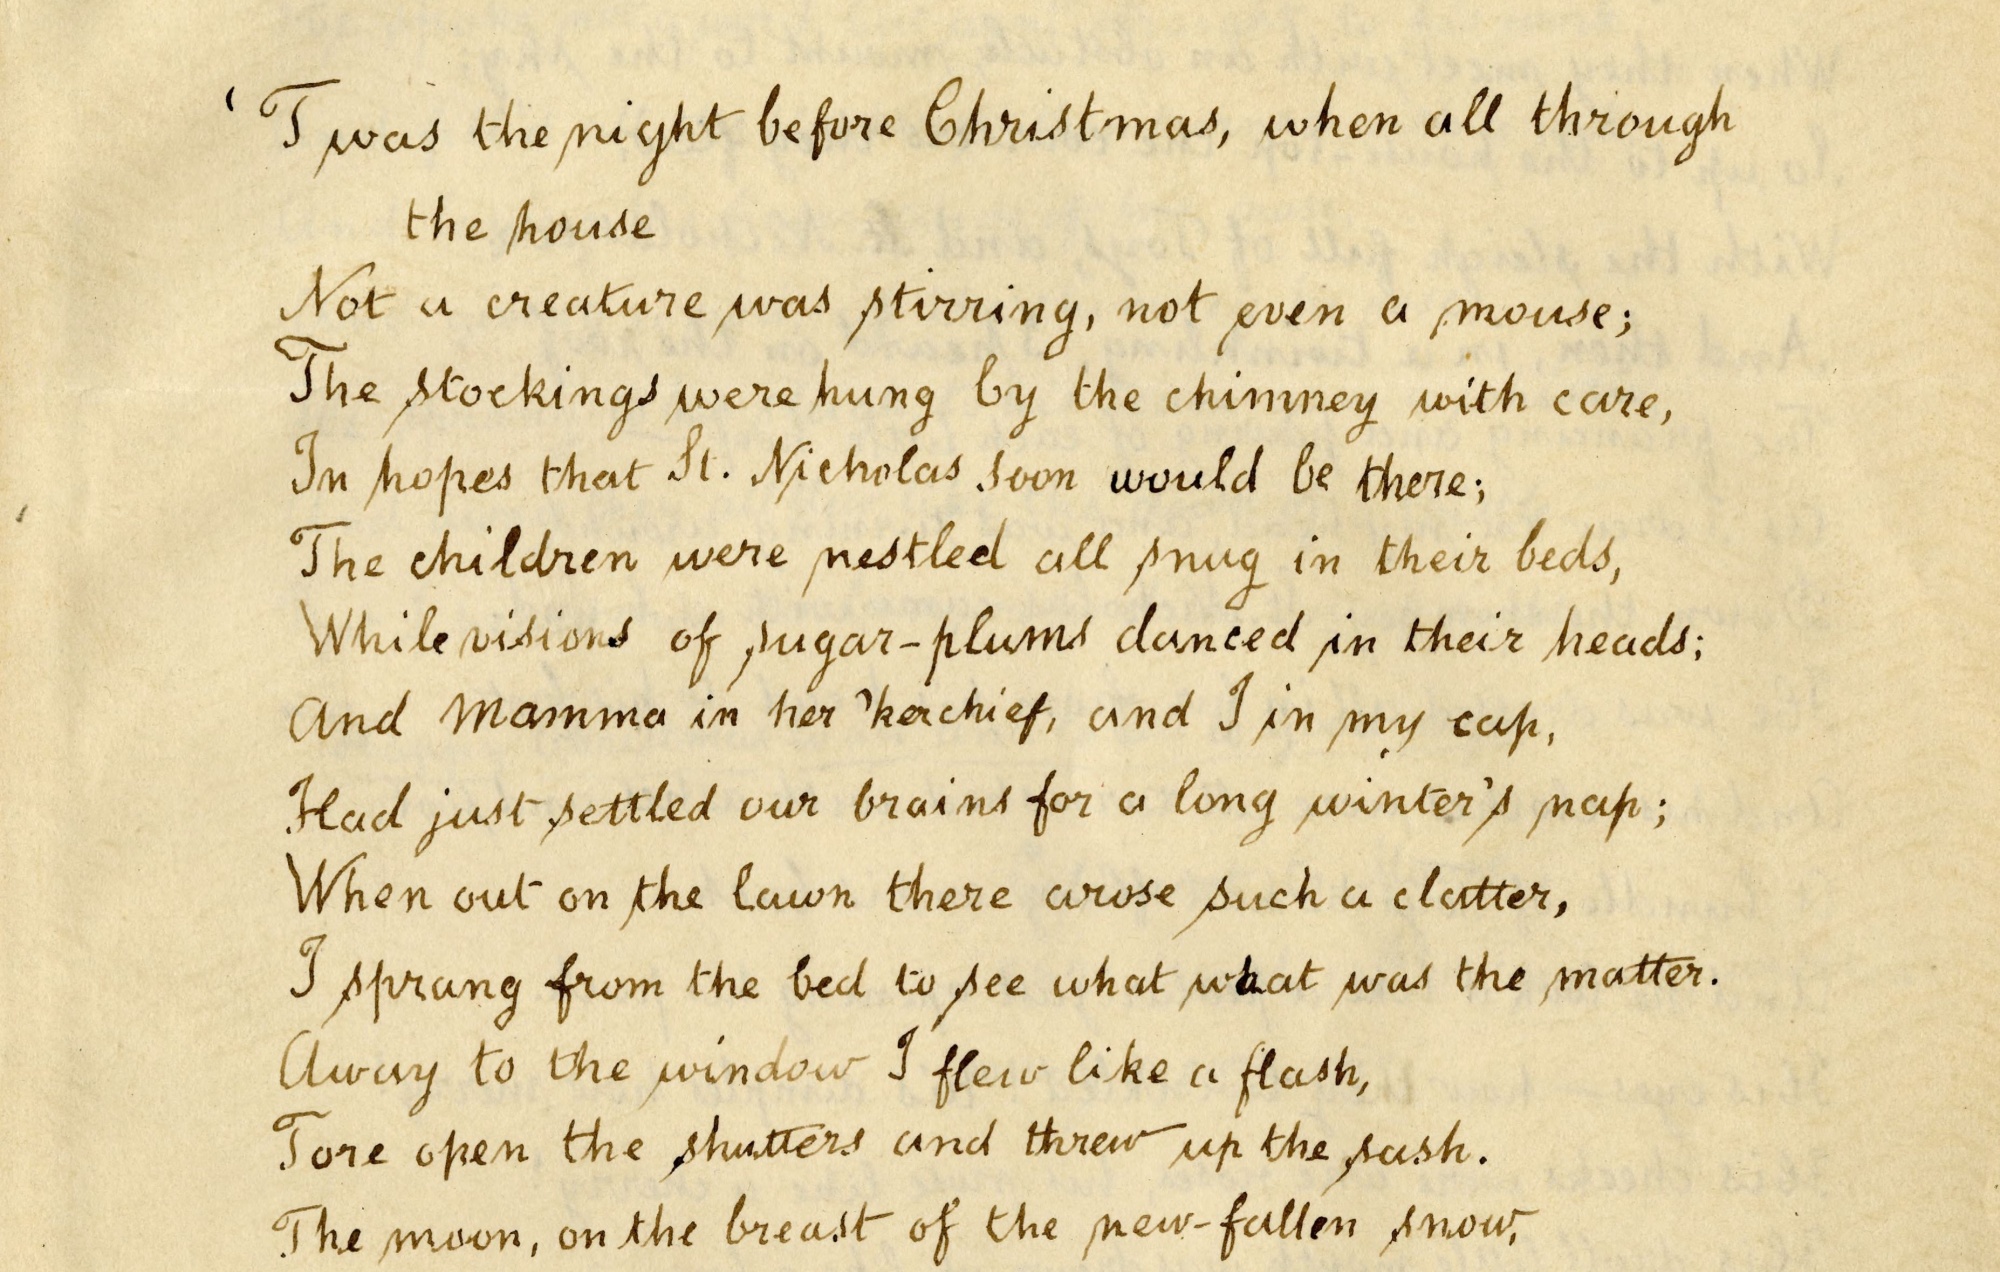 Moore’s handwritten manuscript from 1862.